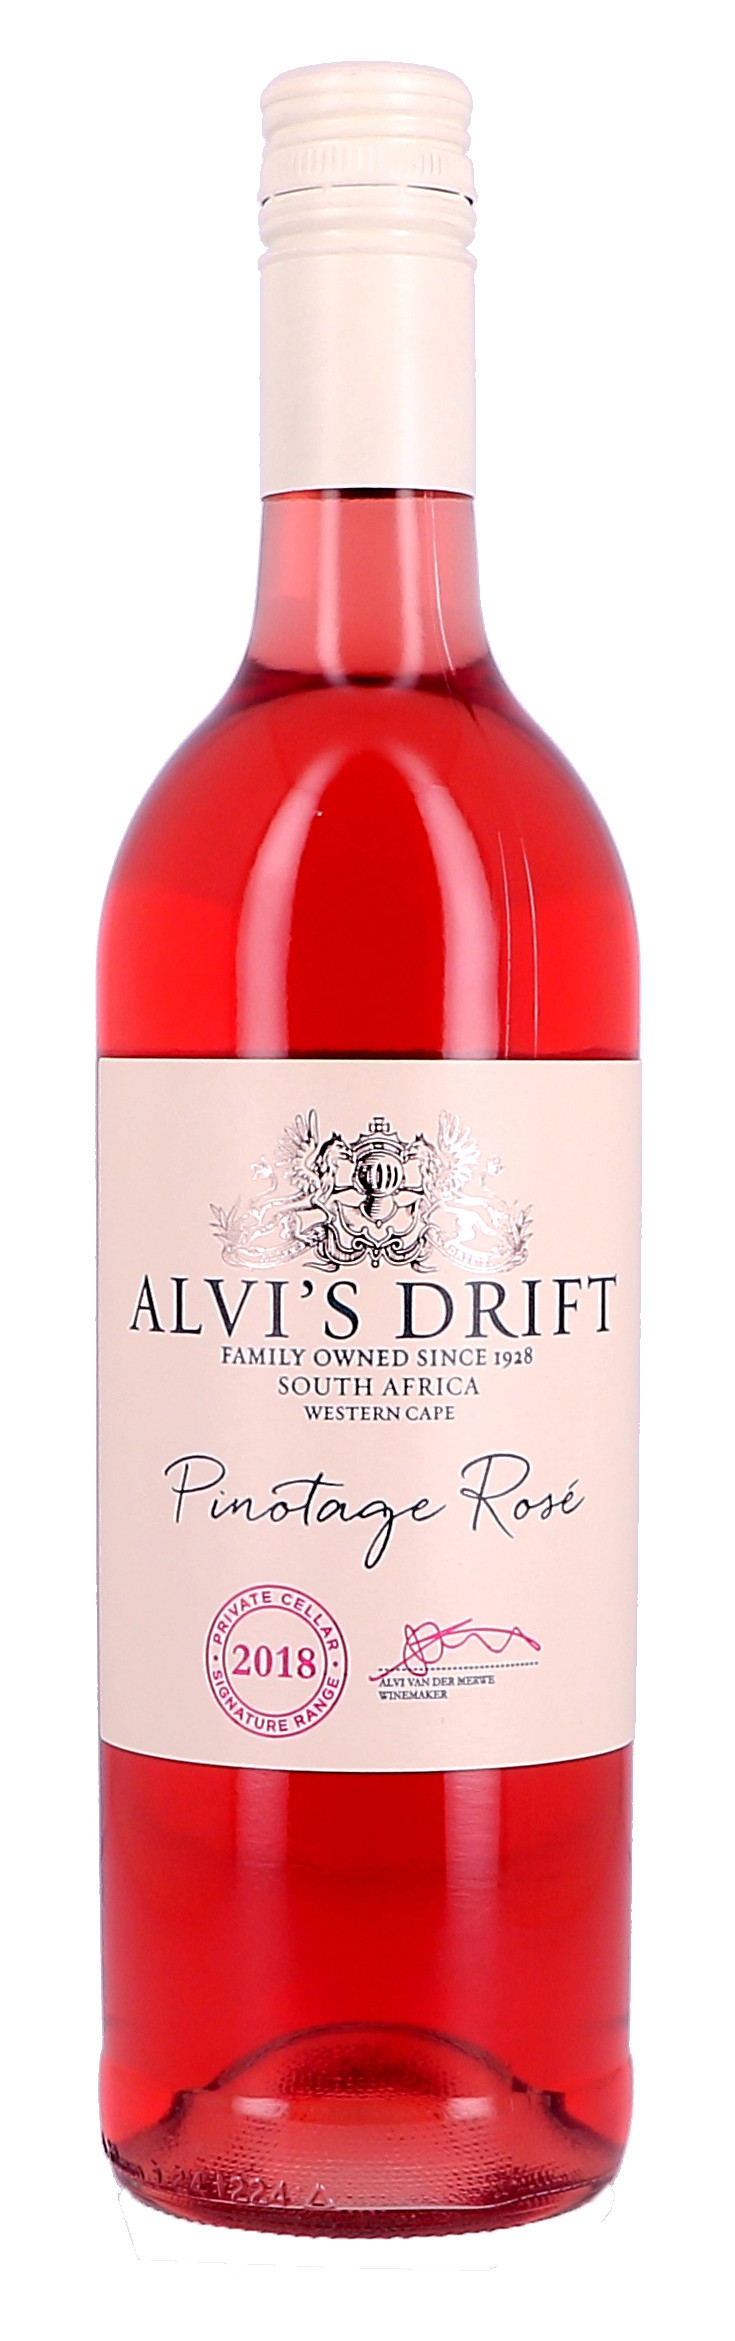 Signature Pinotage Rosé 75cl 2018 Alvi's Drift - Breede River Valley - Zuid Afrika (Wijnen)